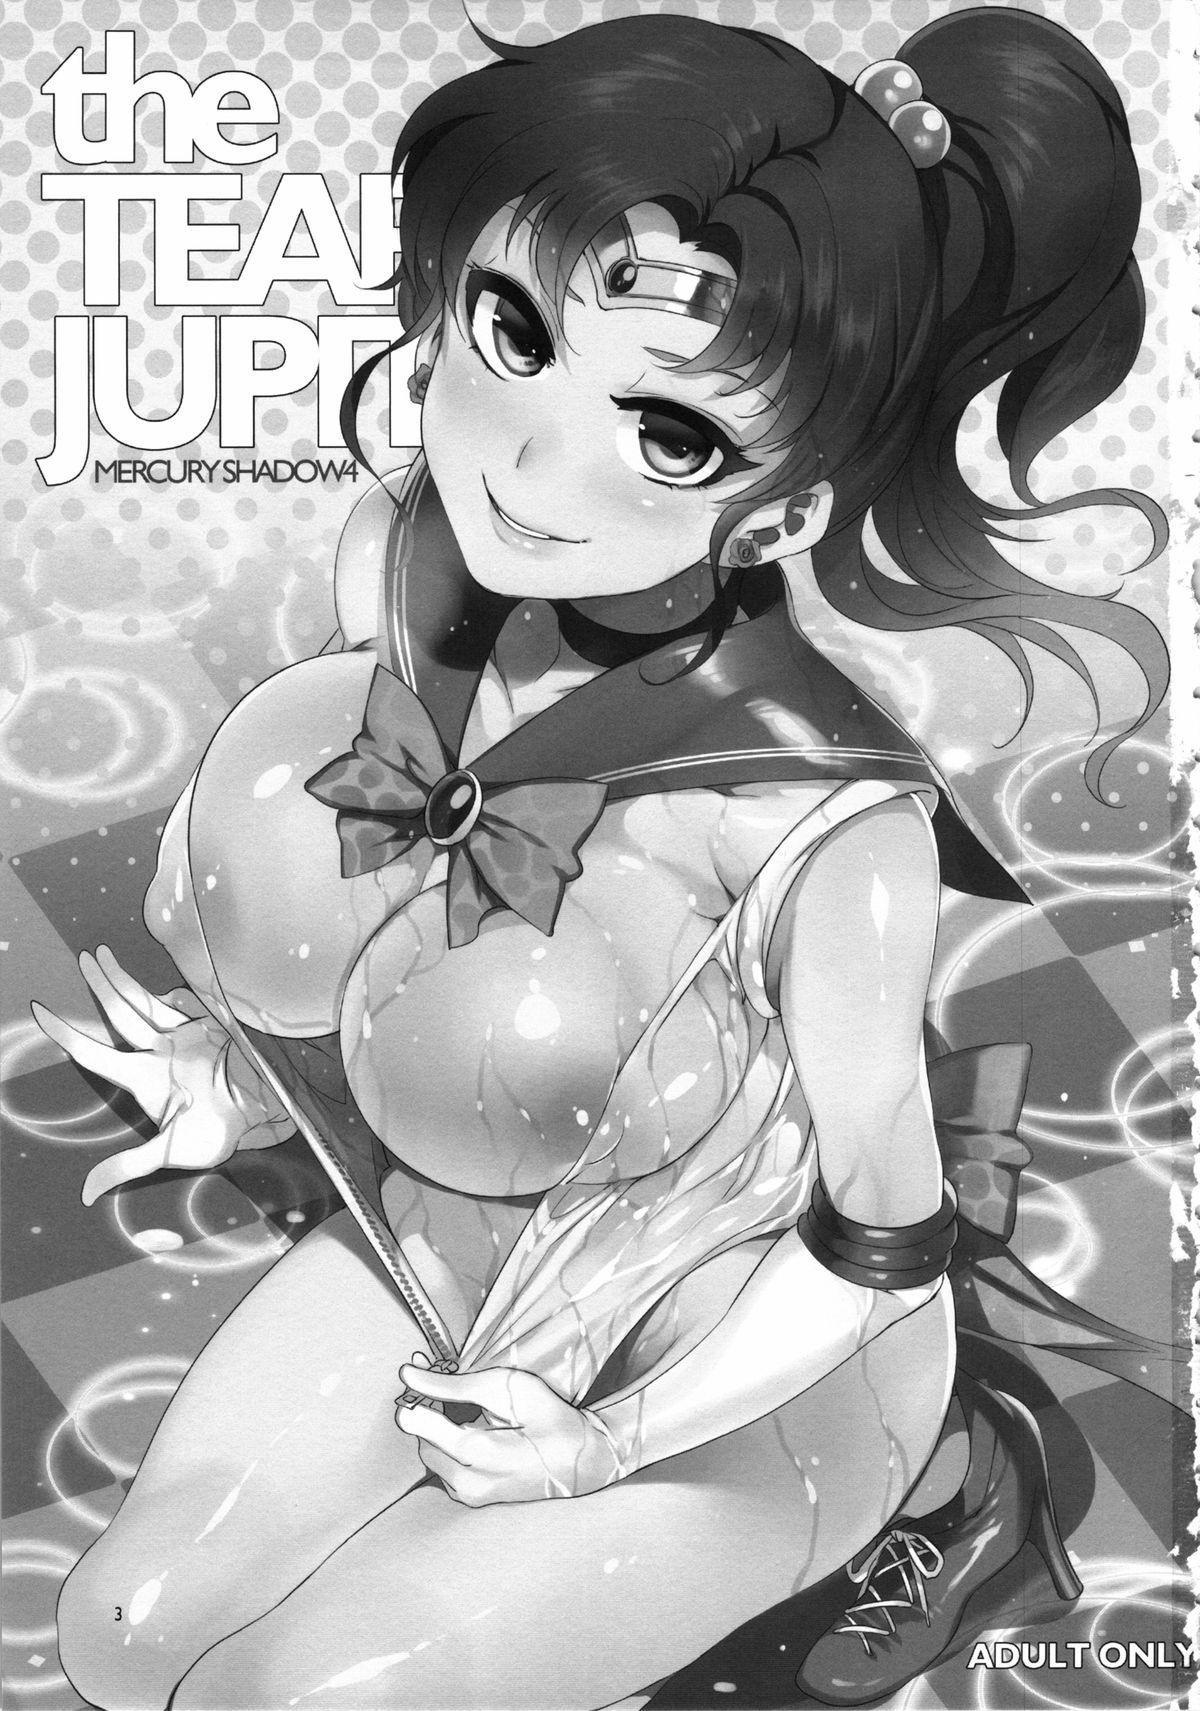 Blow the TEARS of JUPITER: MERCURY SHADOW 4 - Sailor moon Jock - Page 3